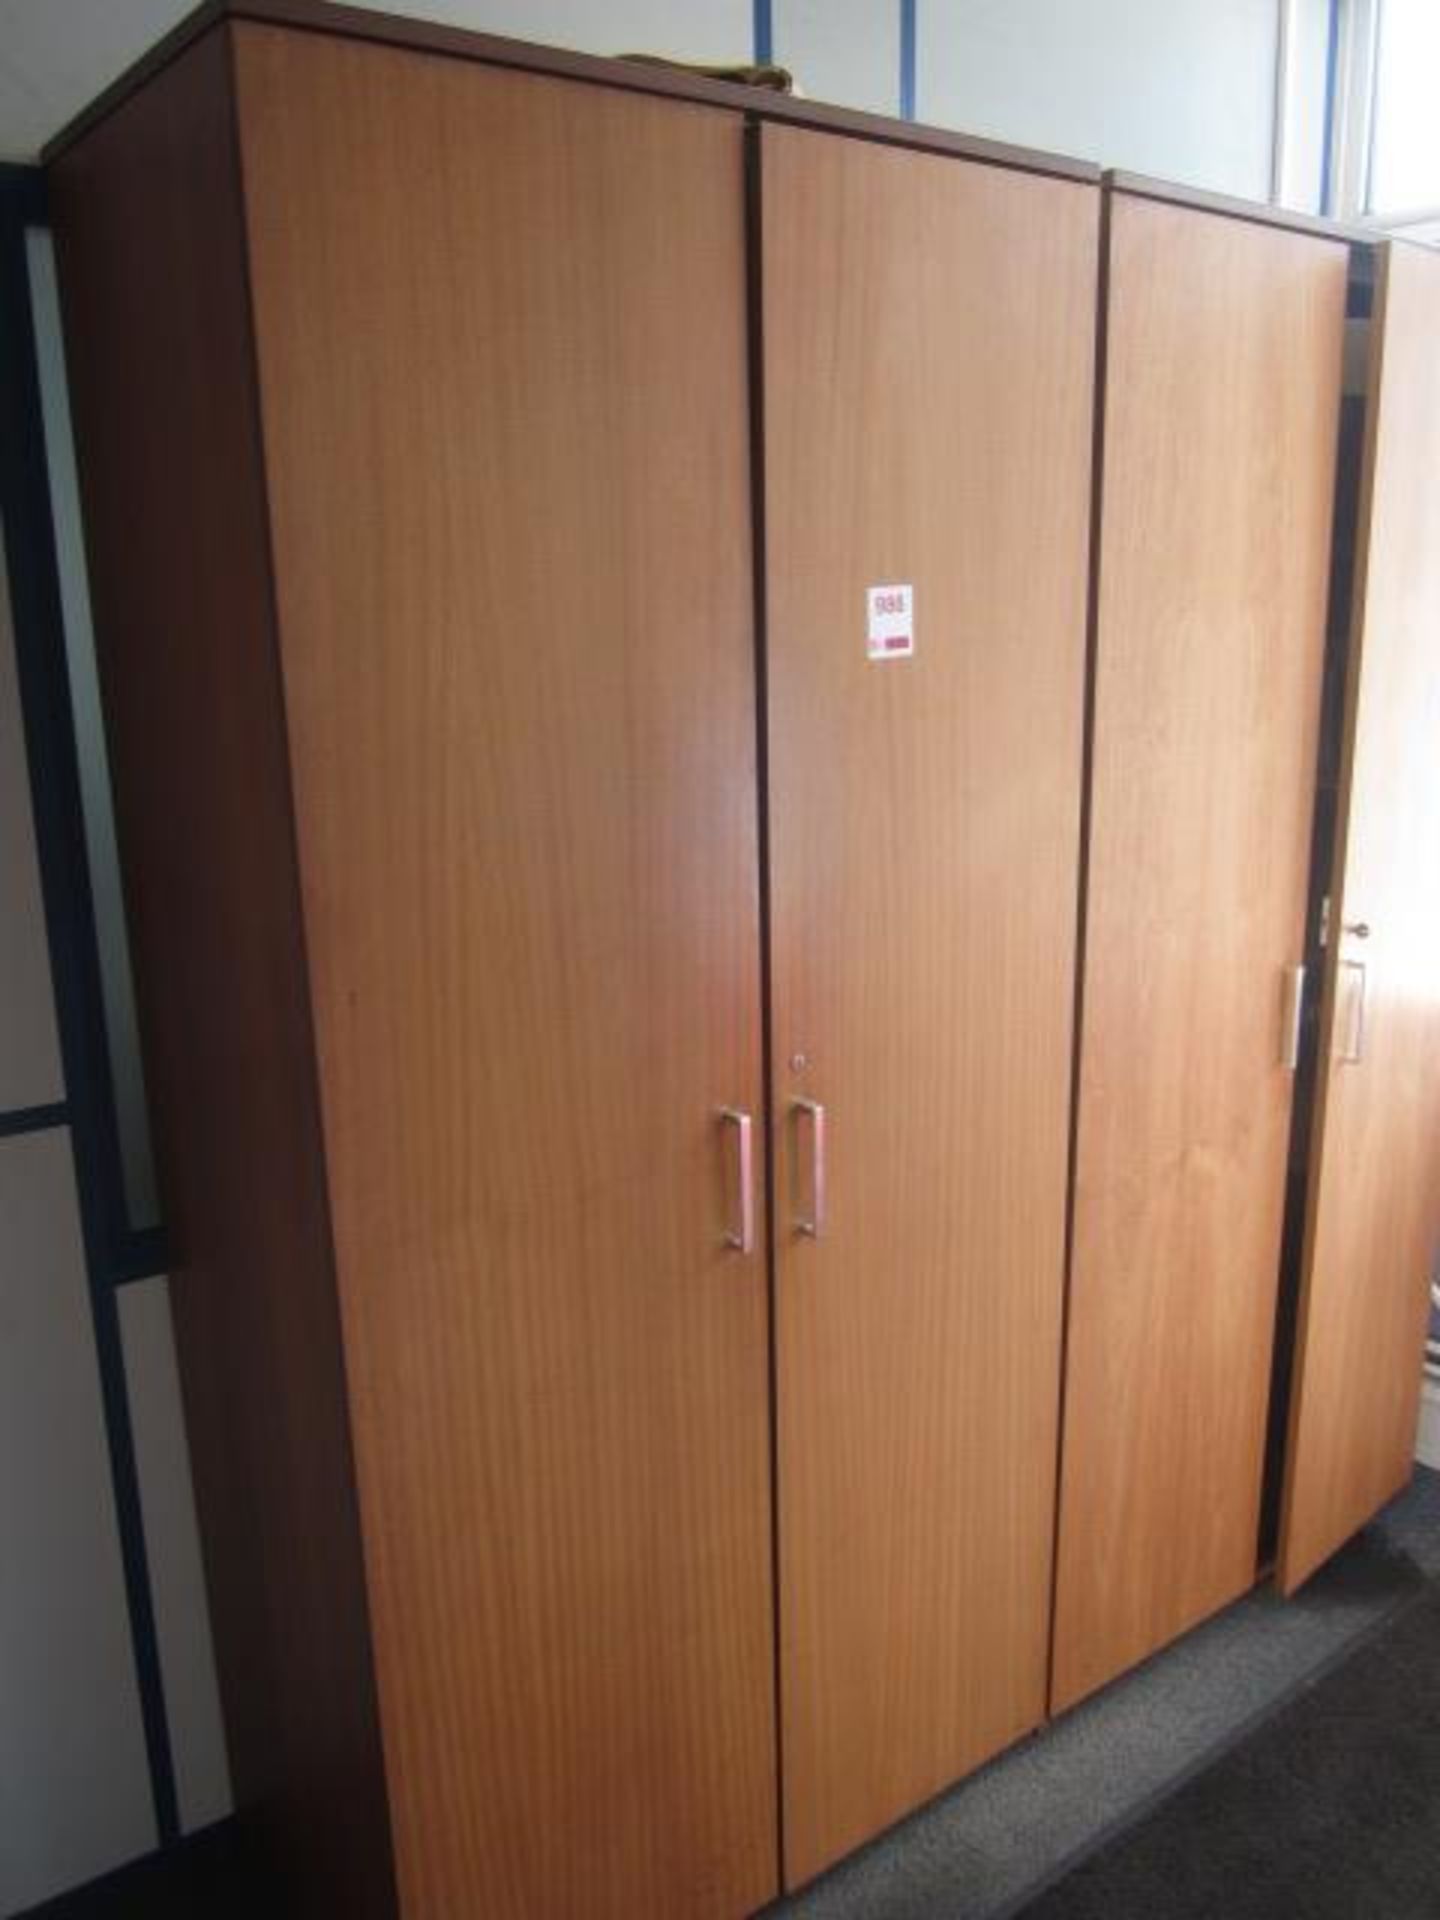 Two wood effect full height 2 door storage cupboards, excluding contents